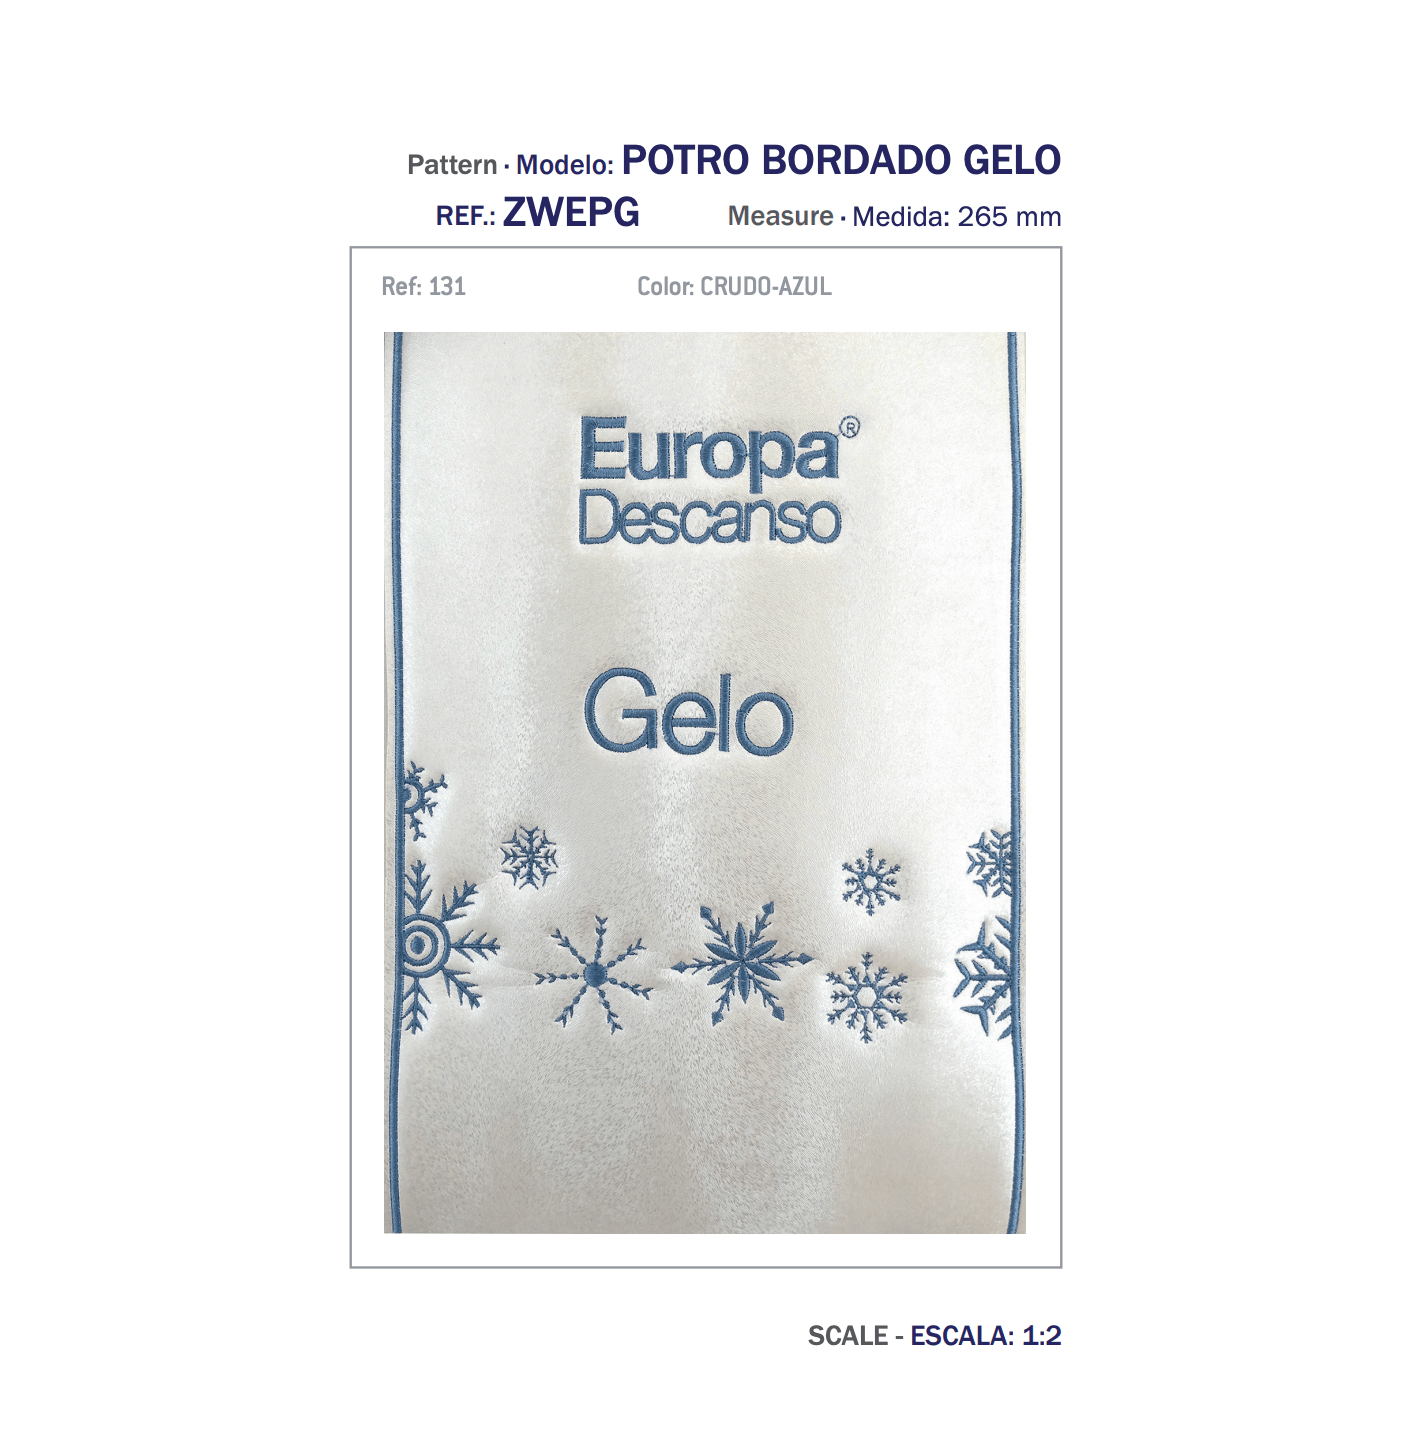 Ejemplo de etiqueta de Europa Descanso Gelo